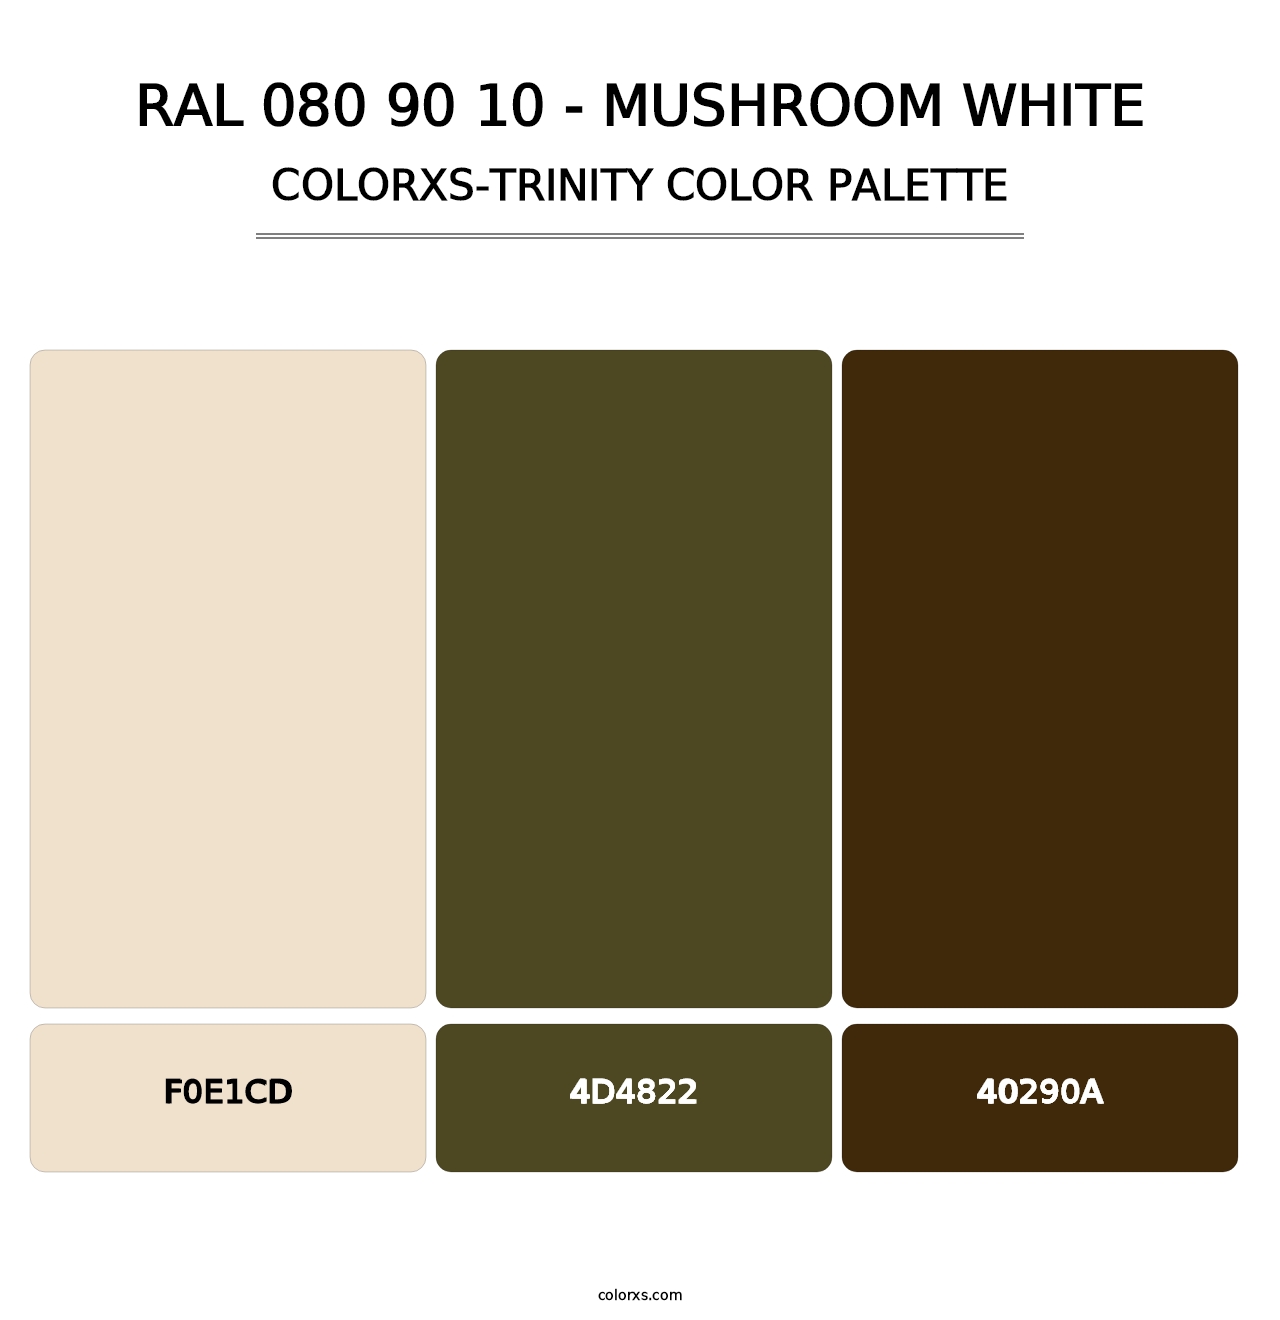 RAL 080 90 10 - Mushroom White - Colorxs Trinity Palette